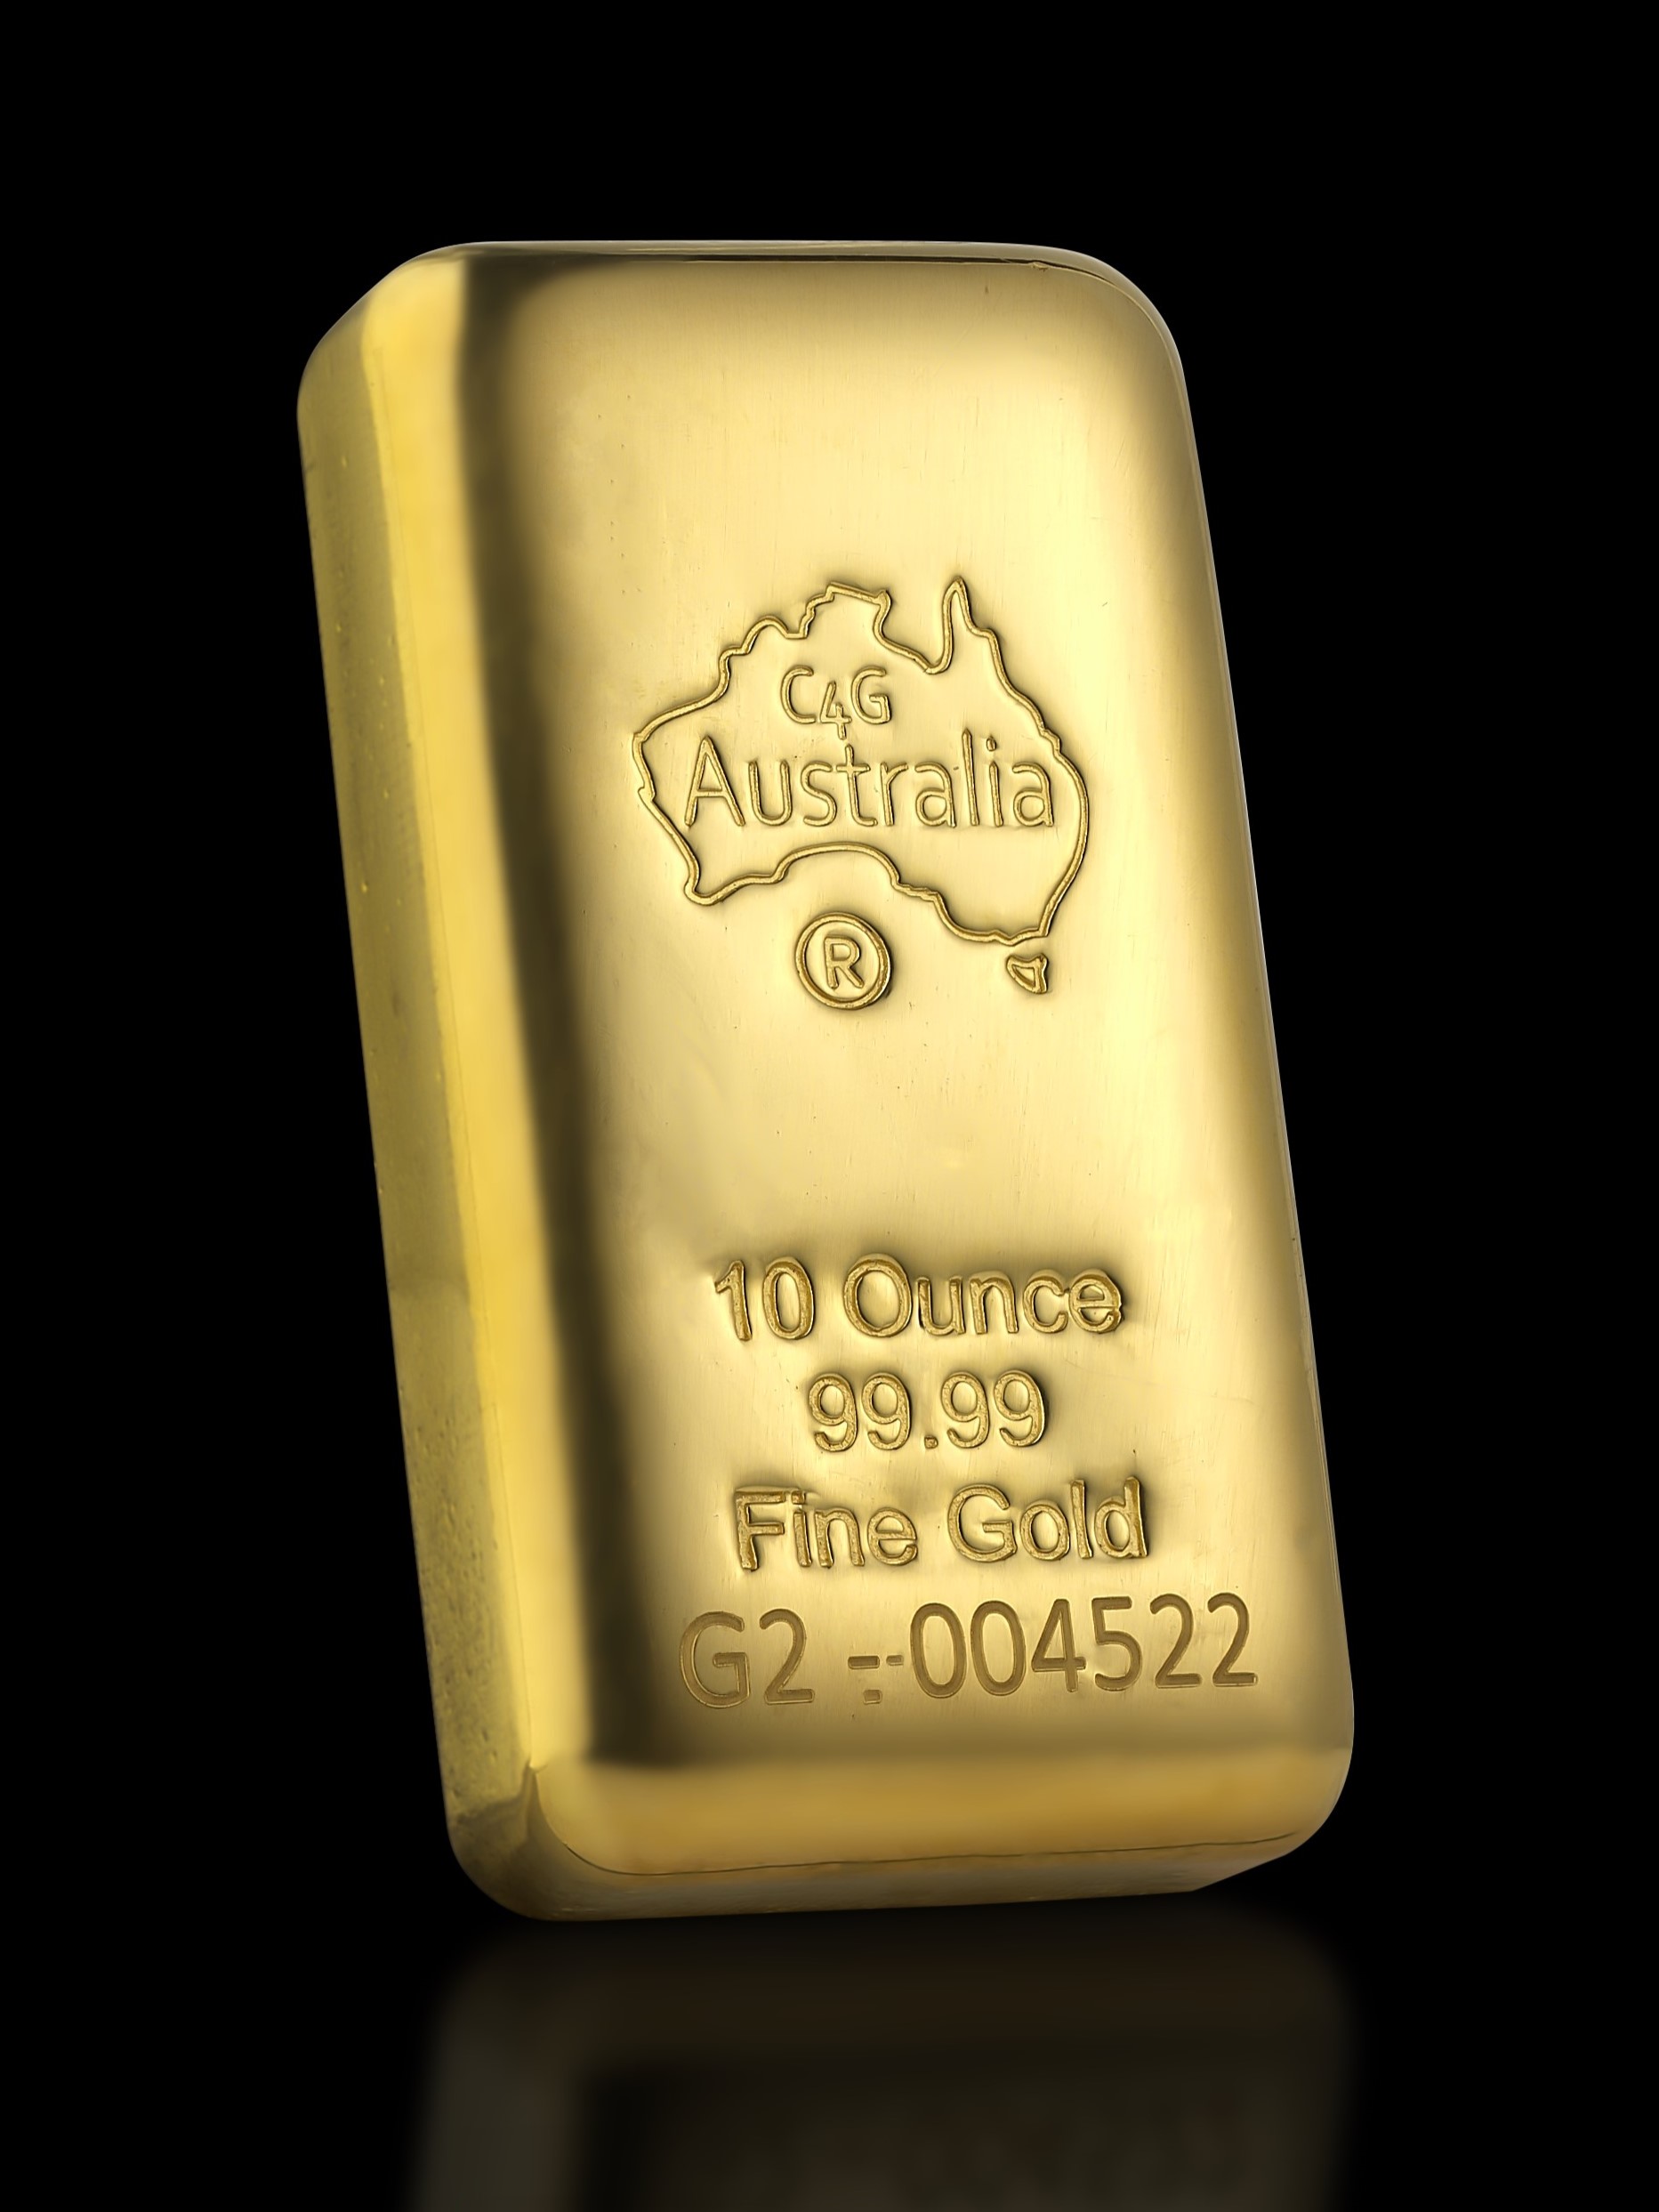 10 oz C4G Cast Gold Bullion 99.99% Pure